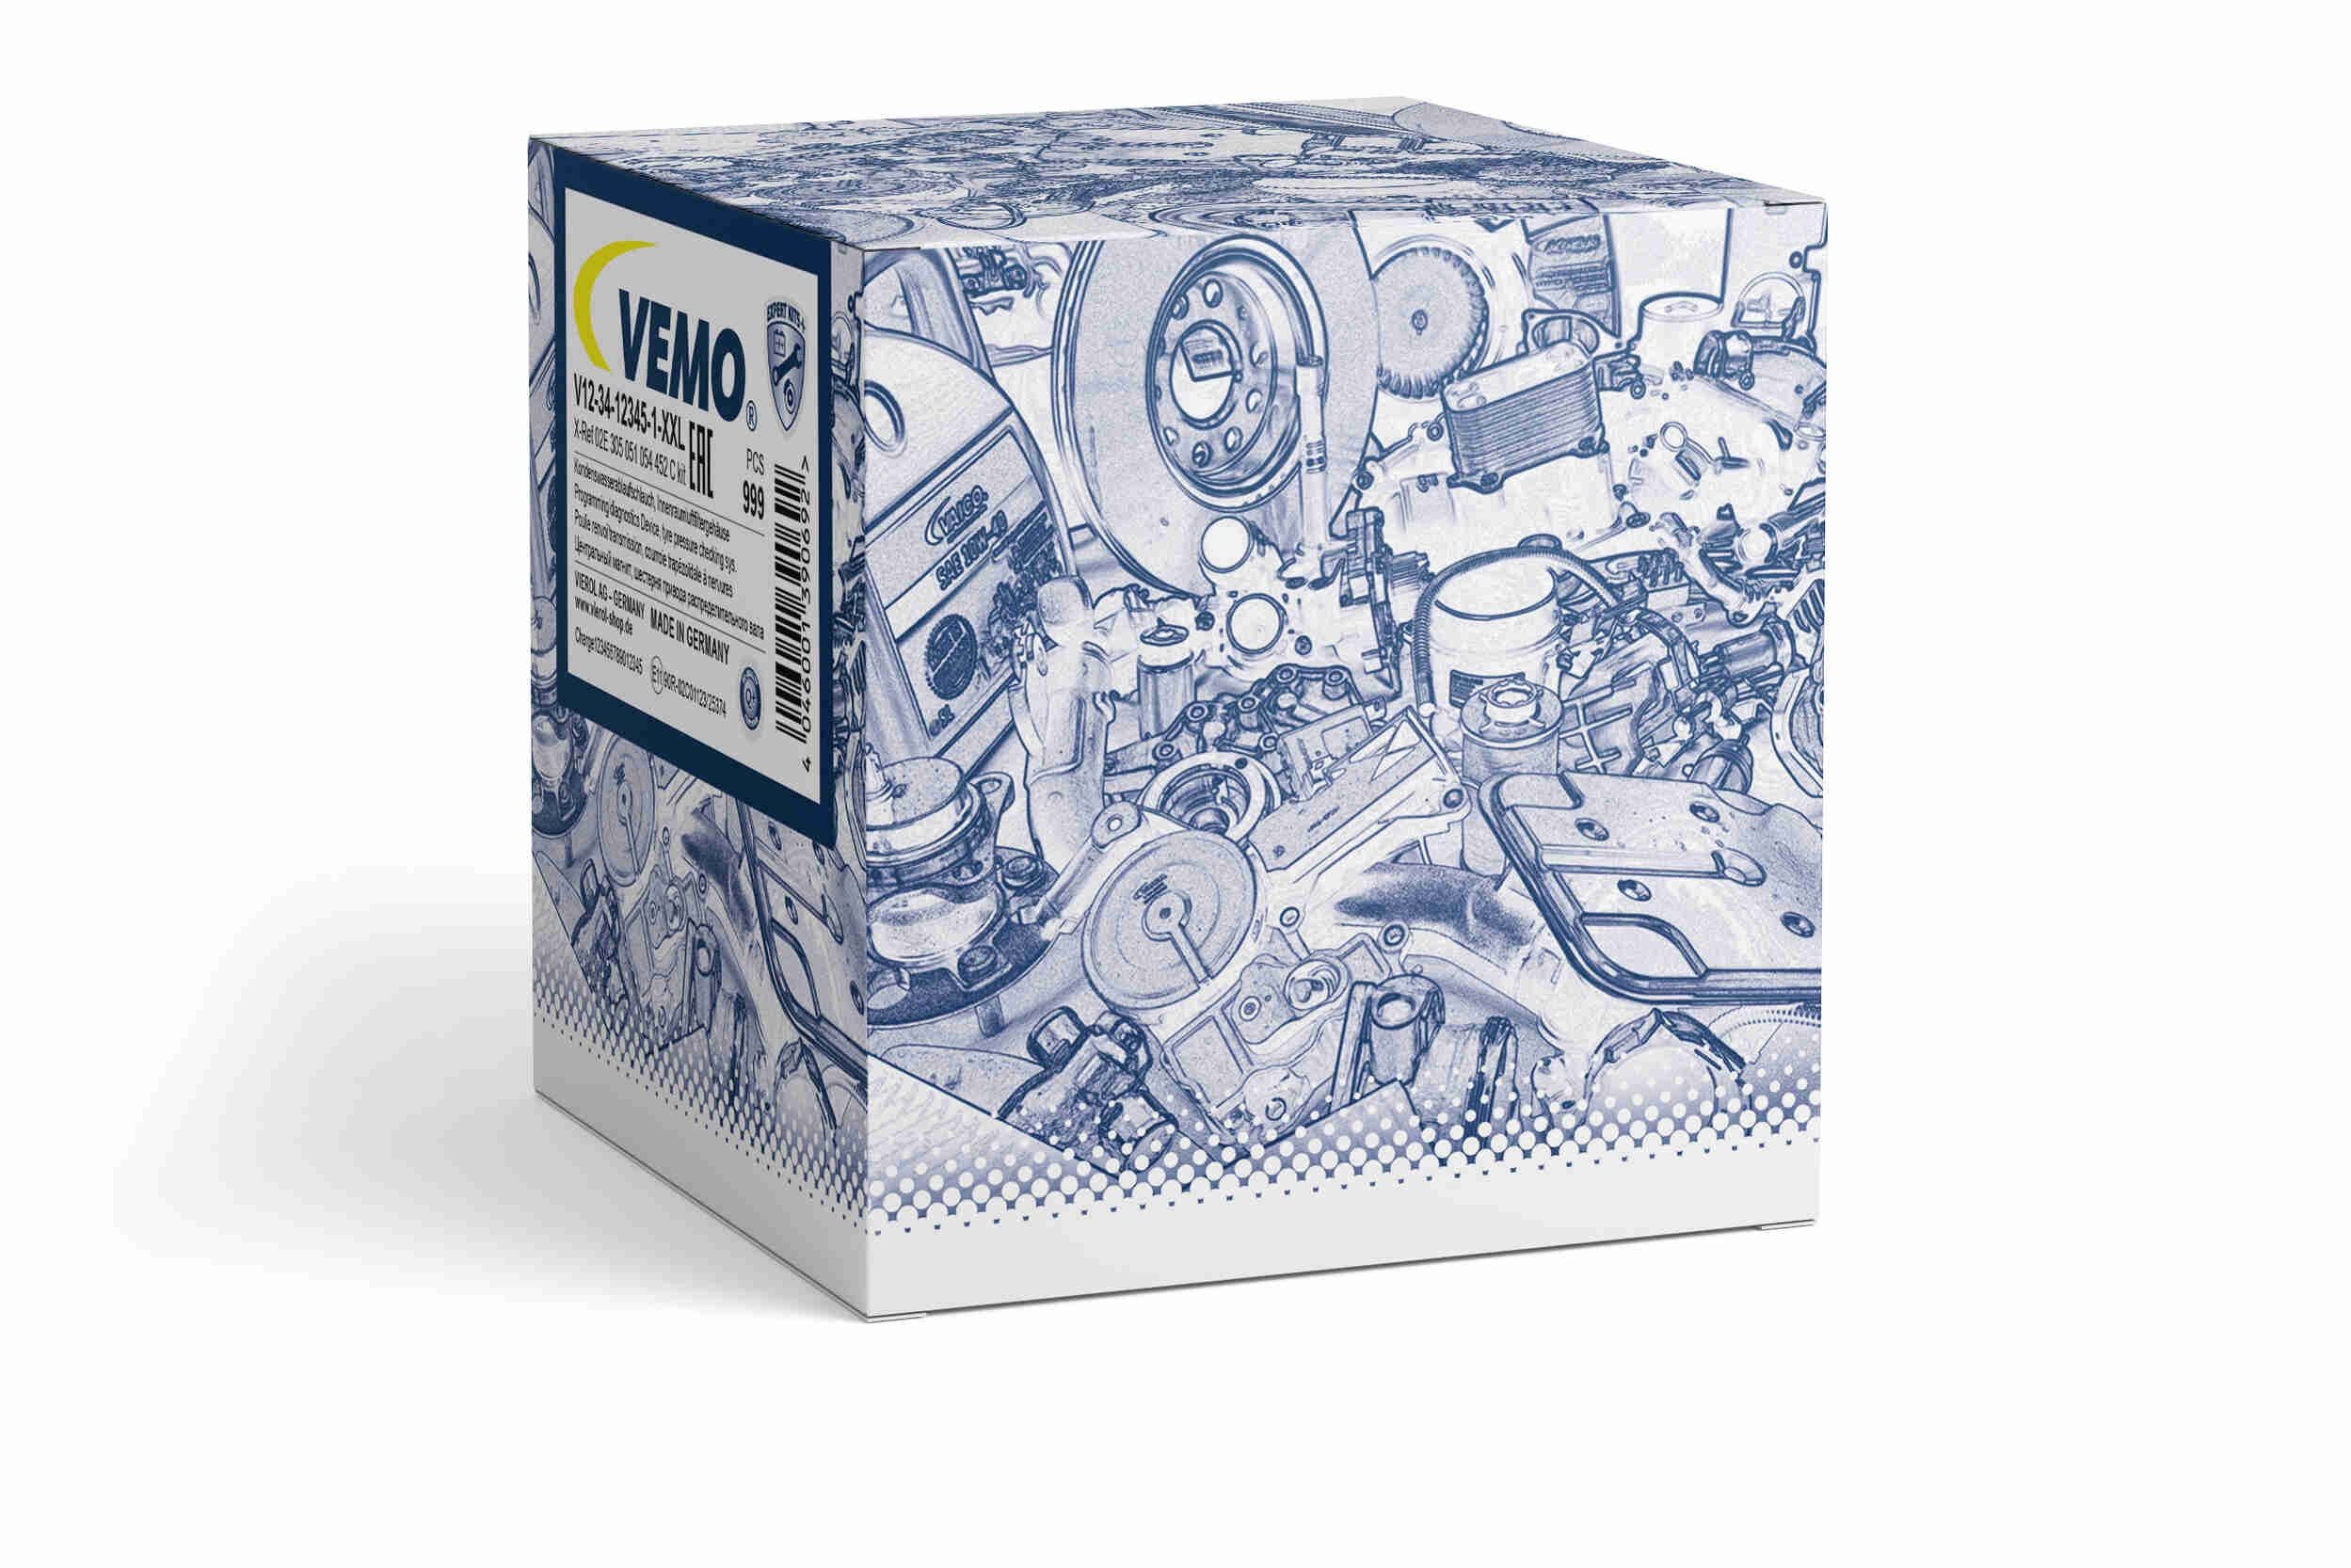 VEMO V30-80-1774 Steering Column Switch Q+, original equipment manufacturer quality